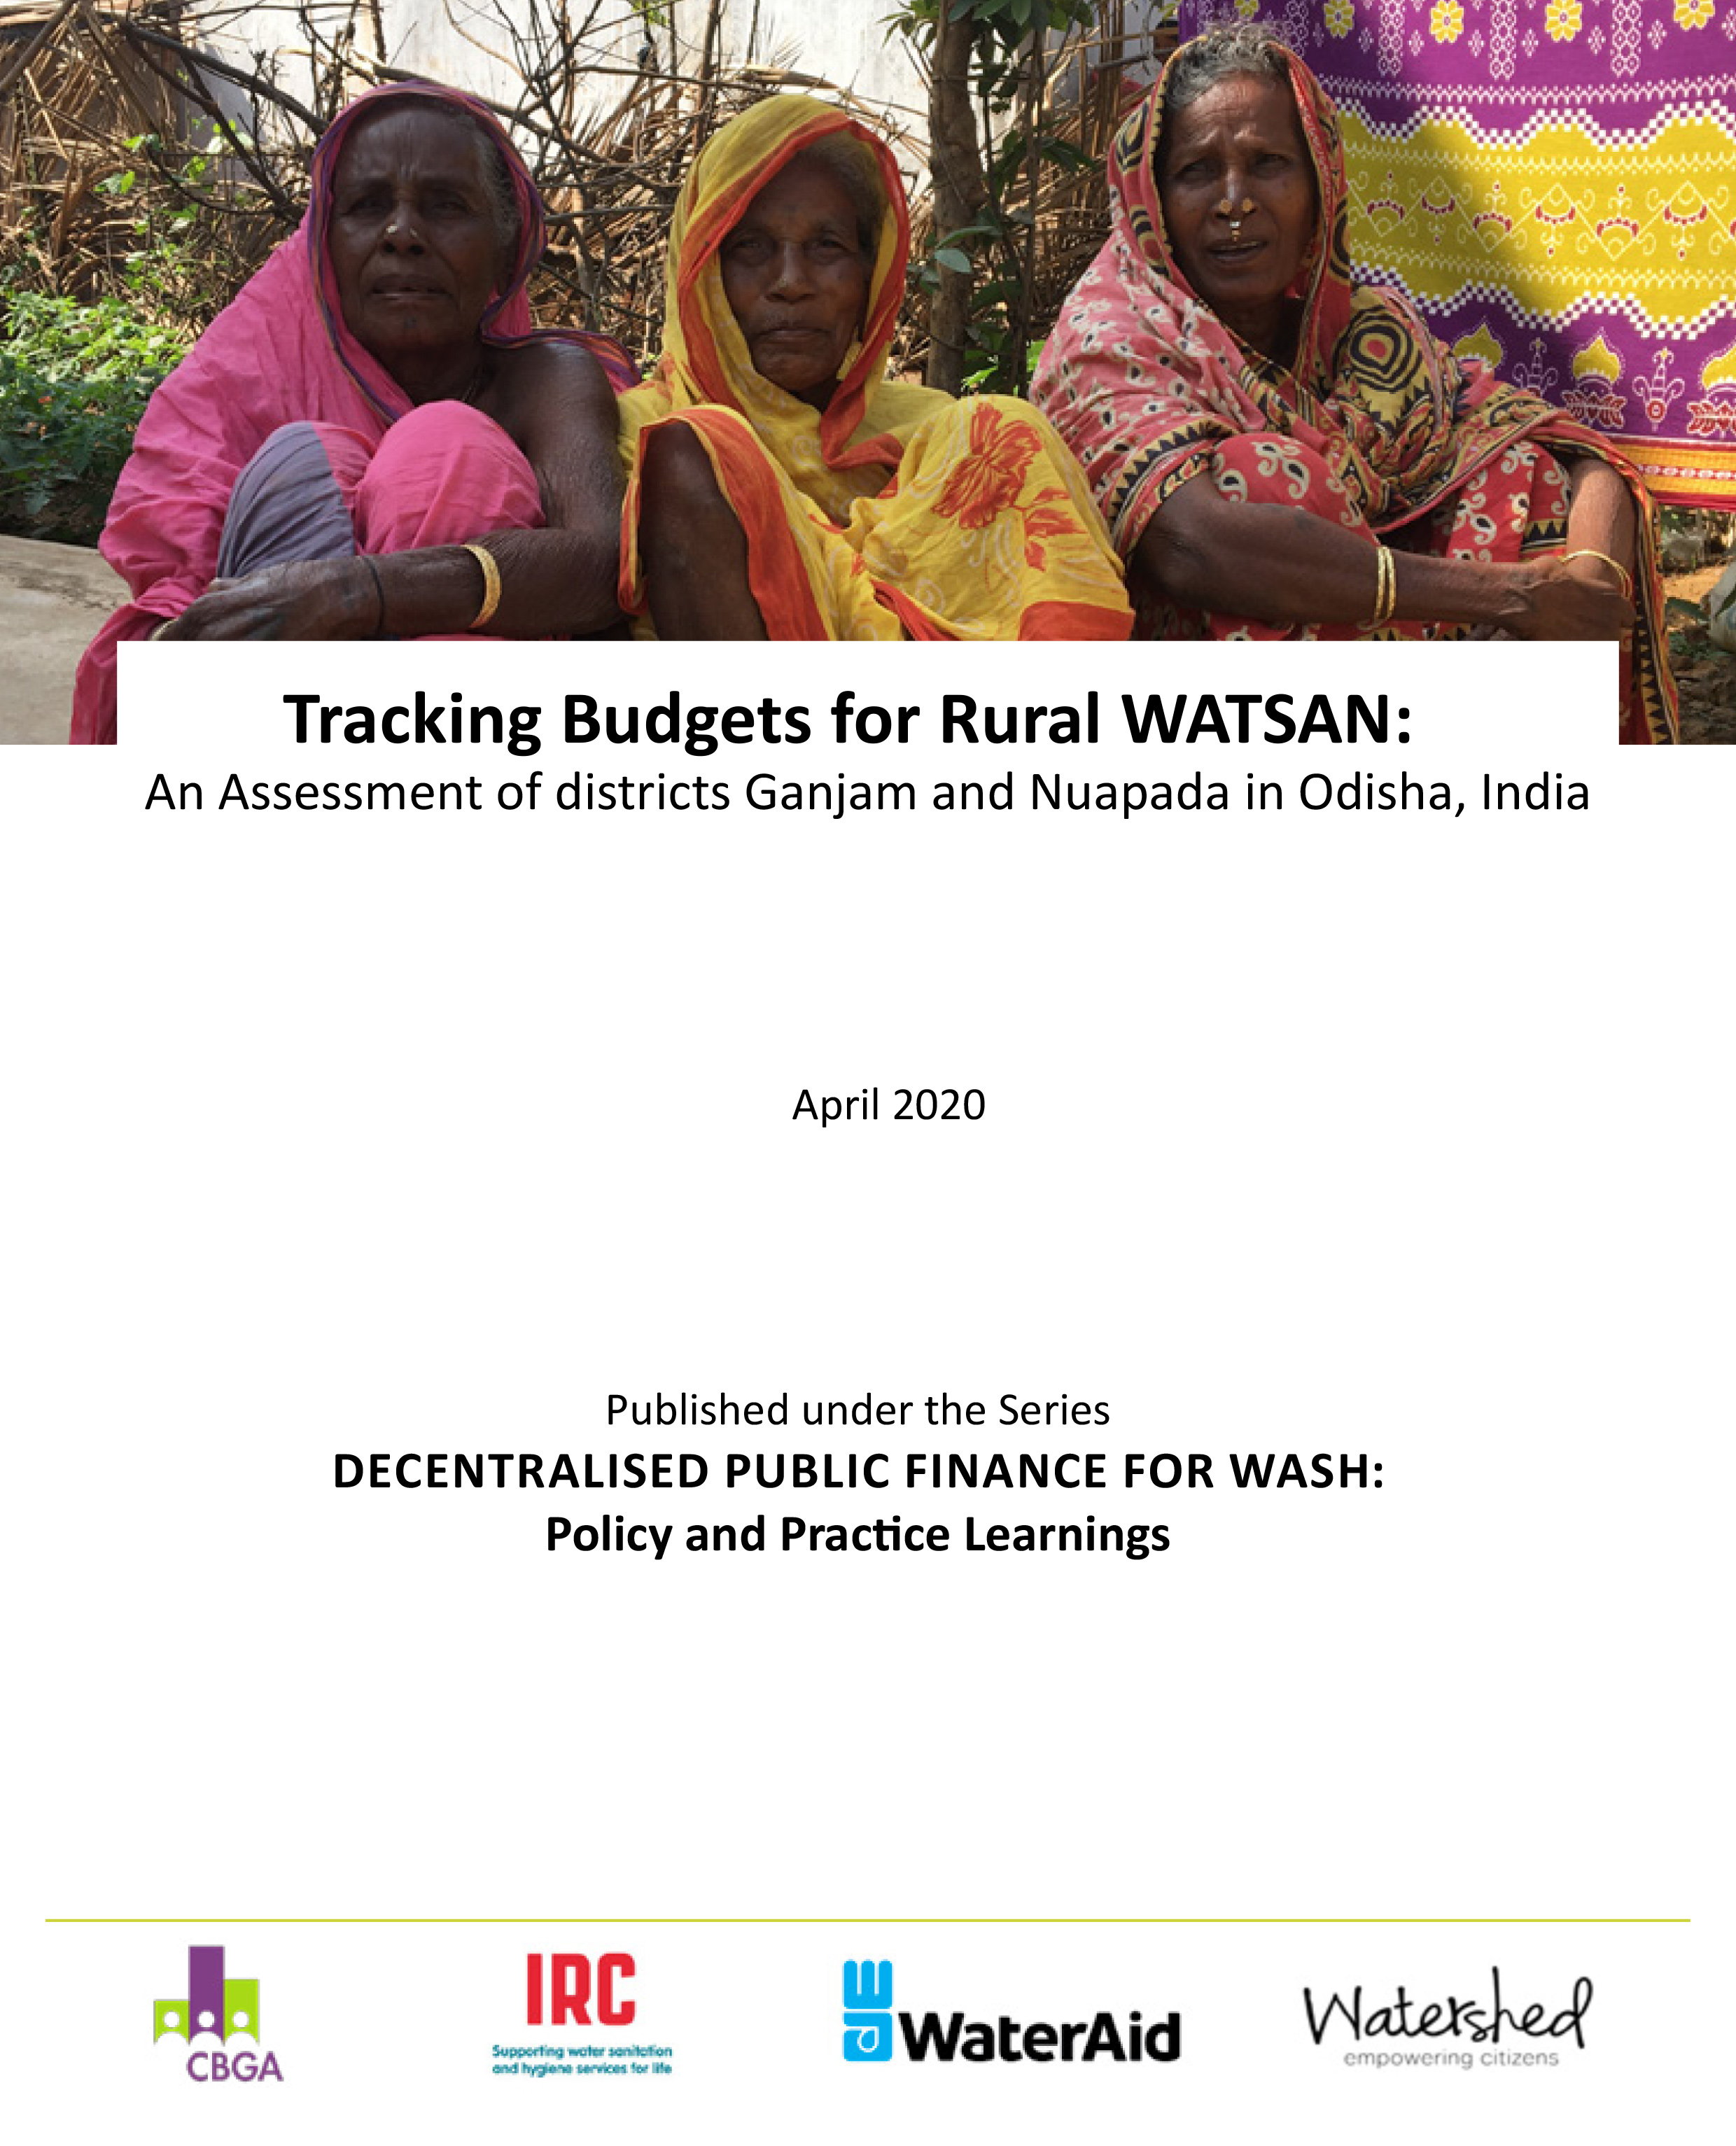 Tracking Budgets for Rural WASH - Odisha